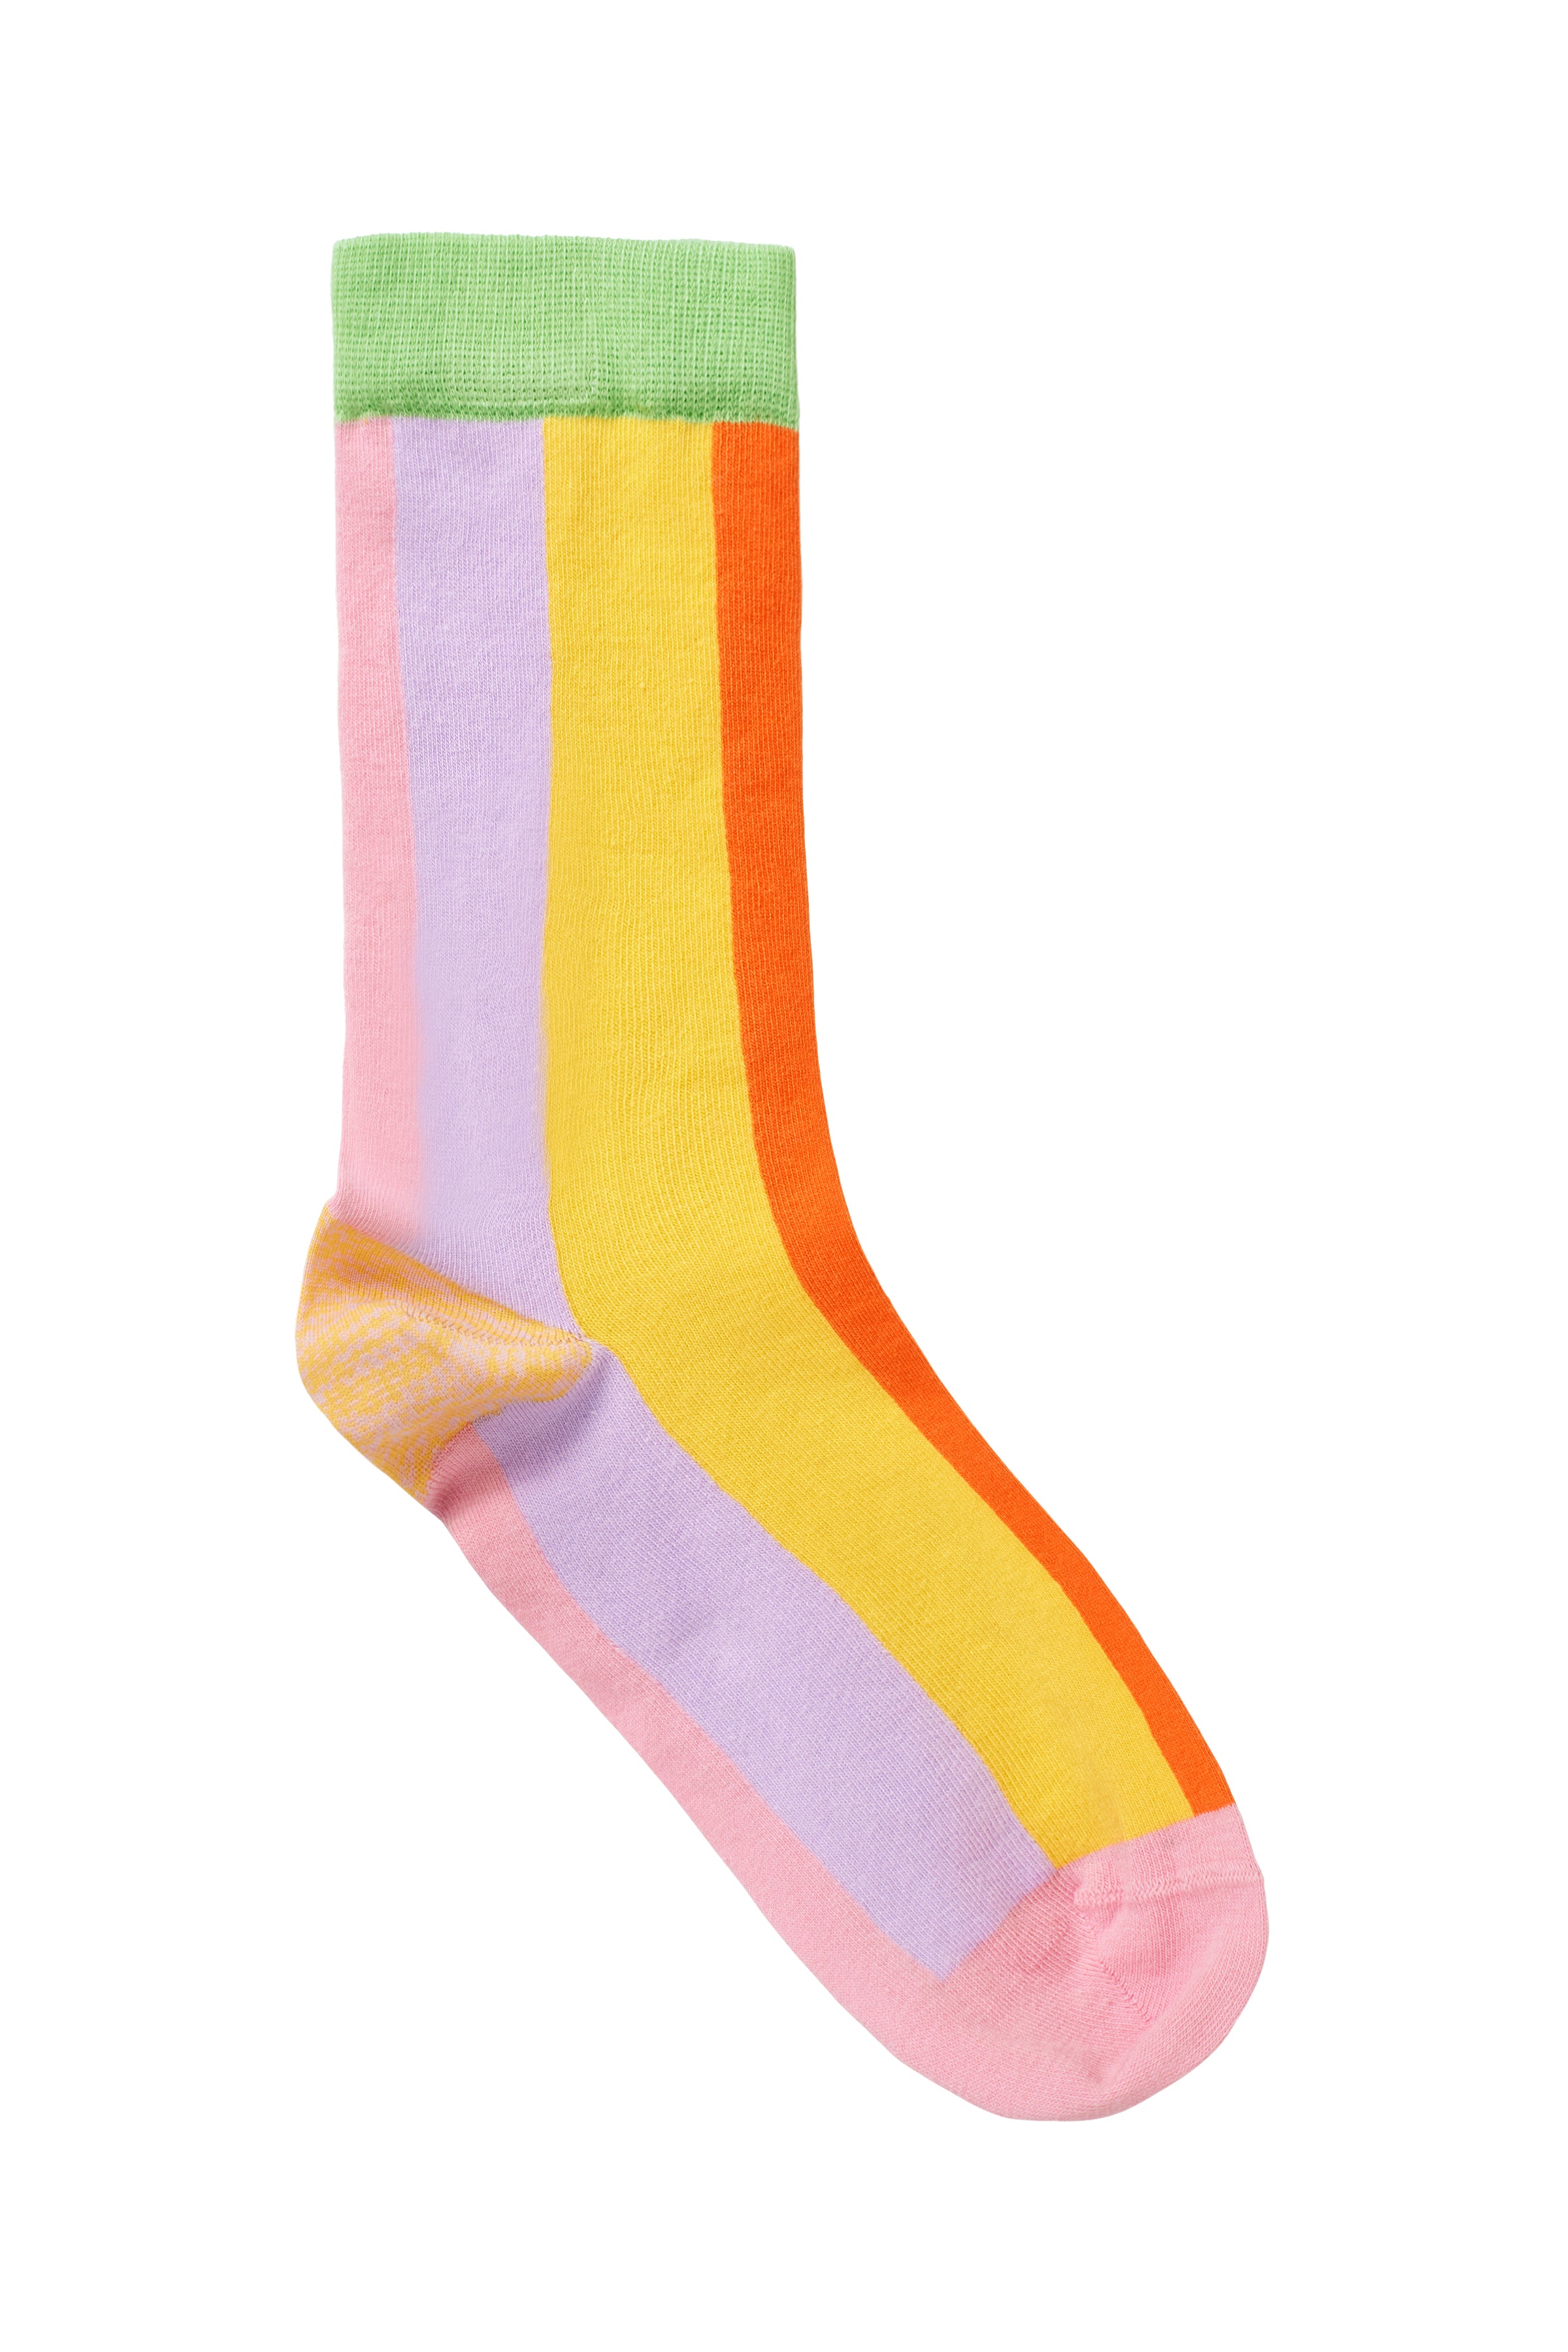 Stine Goya Iggy socks - Candy stripe